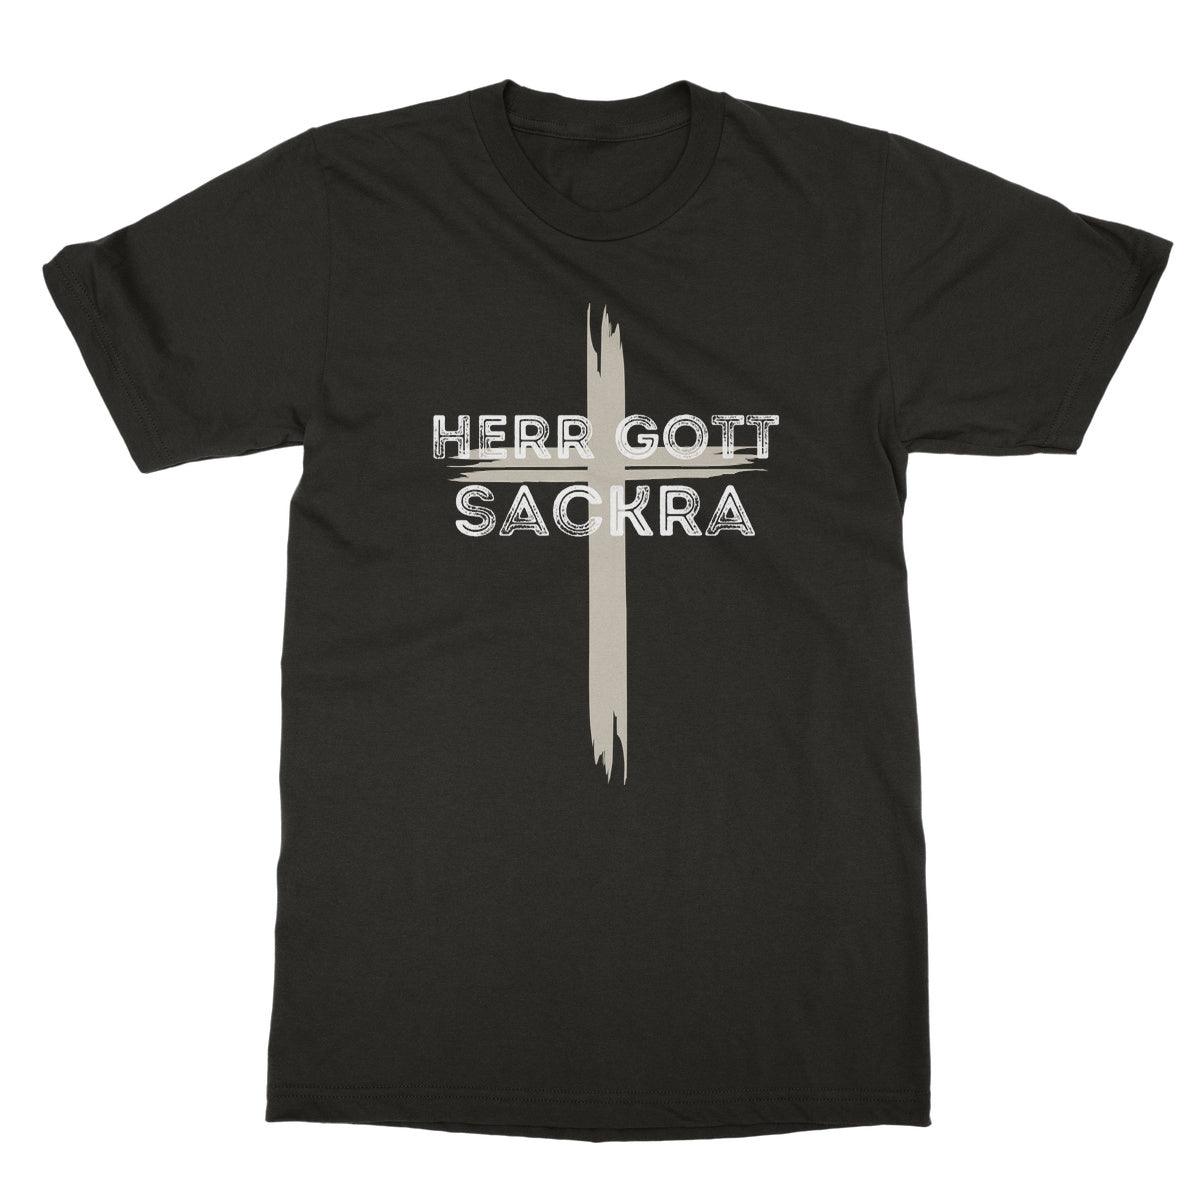 Men's Bavarian Graphic T-Shirt "Herr Gott Sackra" with crucifix - 6 colours - Bavari Shop - Bavarian Outfits, Dirndl, Lederhosen & Accessories